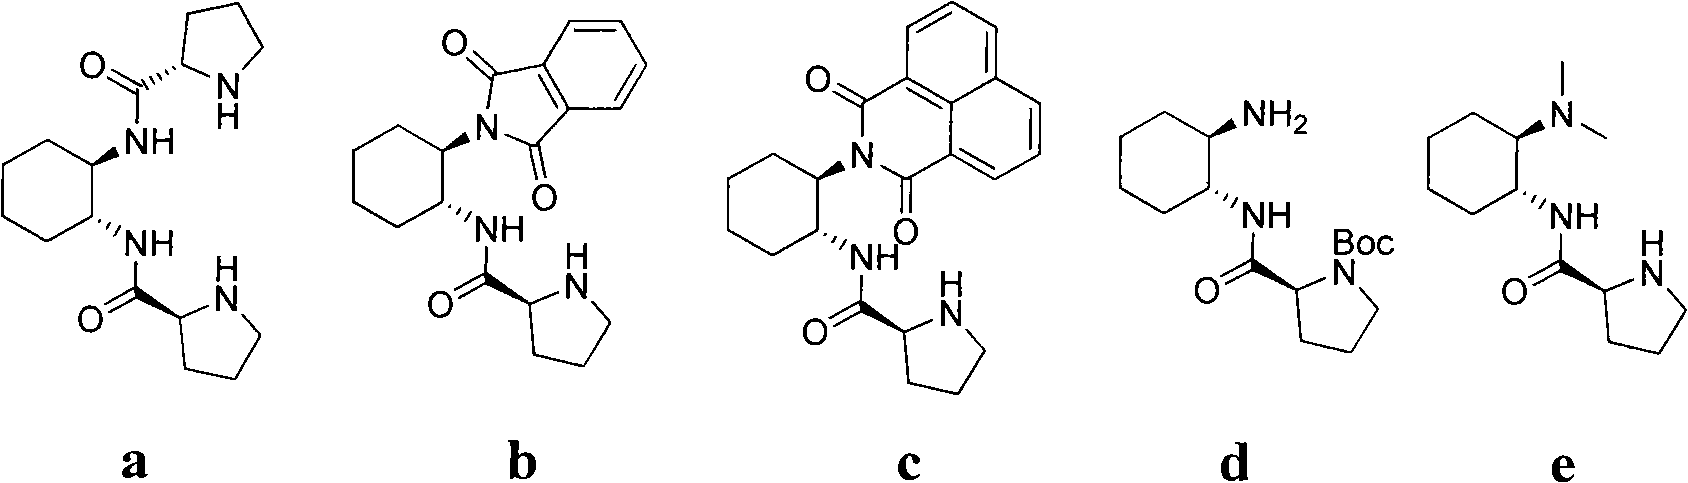 L-prolinamide derivative, preparation method and application of same